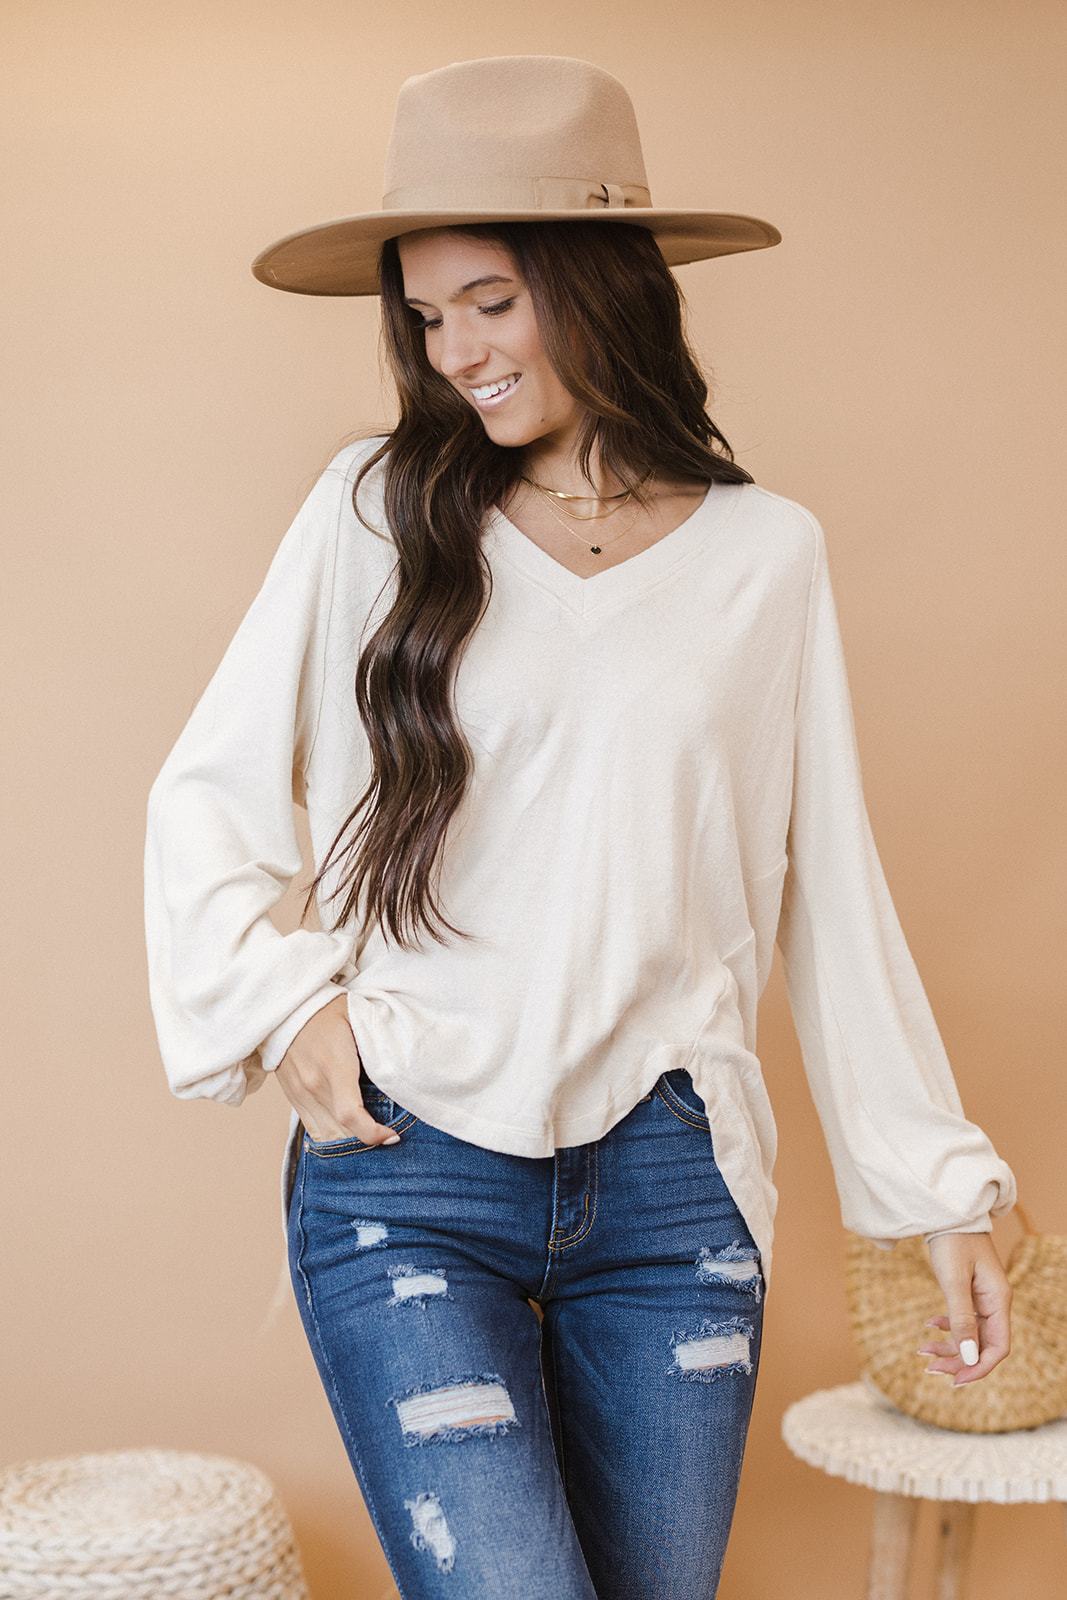 The Unicorn of KanCan Jeans-Jeans-Krush Kandy, Women's Online Fashion Boutique Located in Phoenix, Arizona (Scottsdale Area)